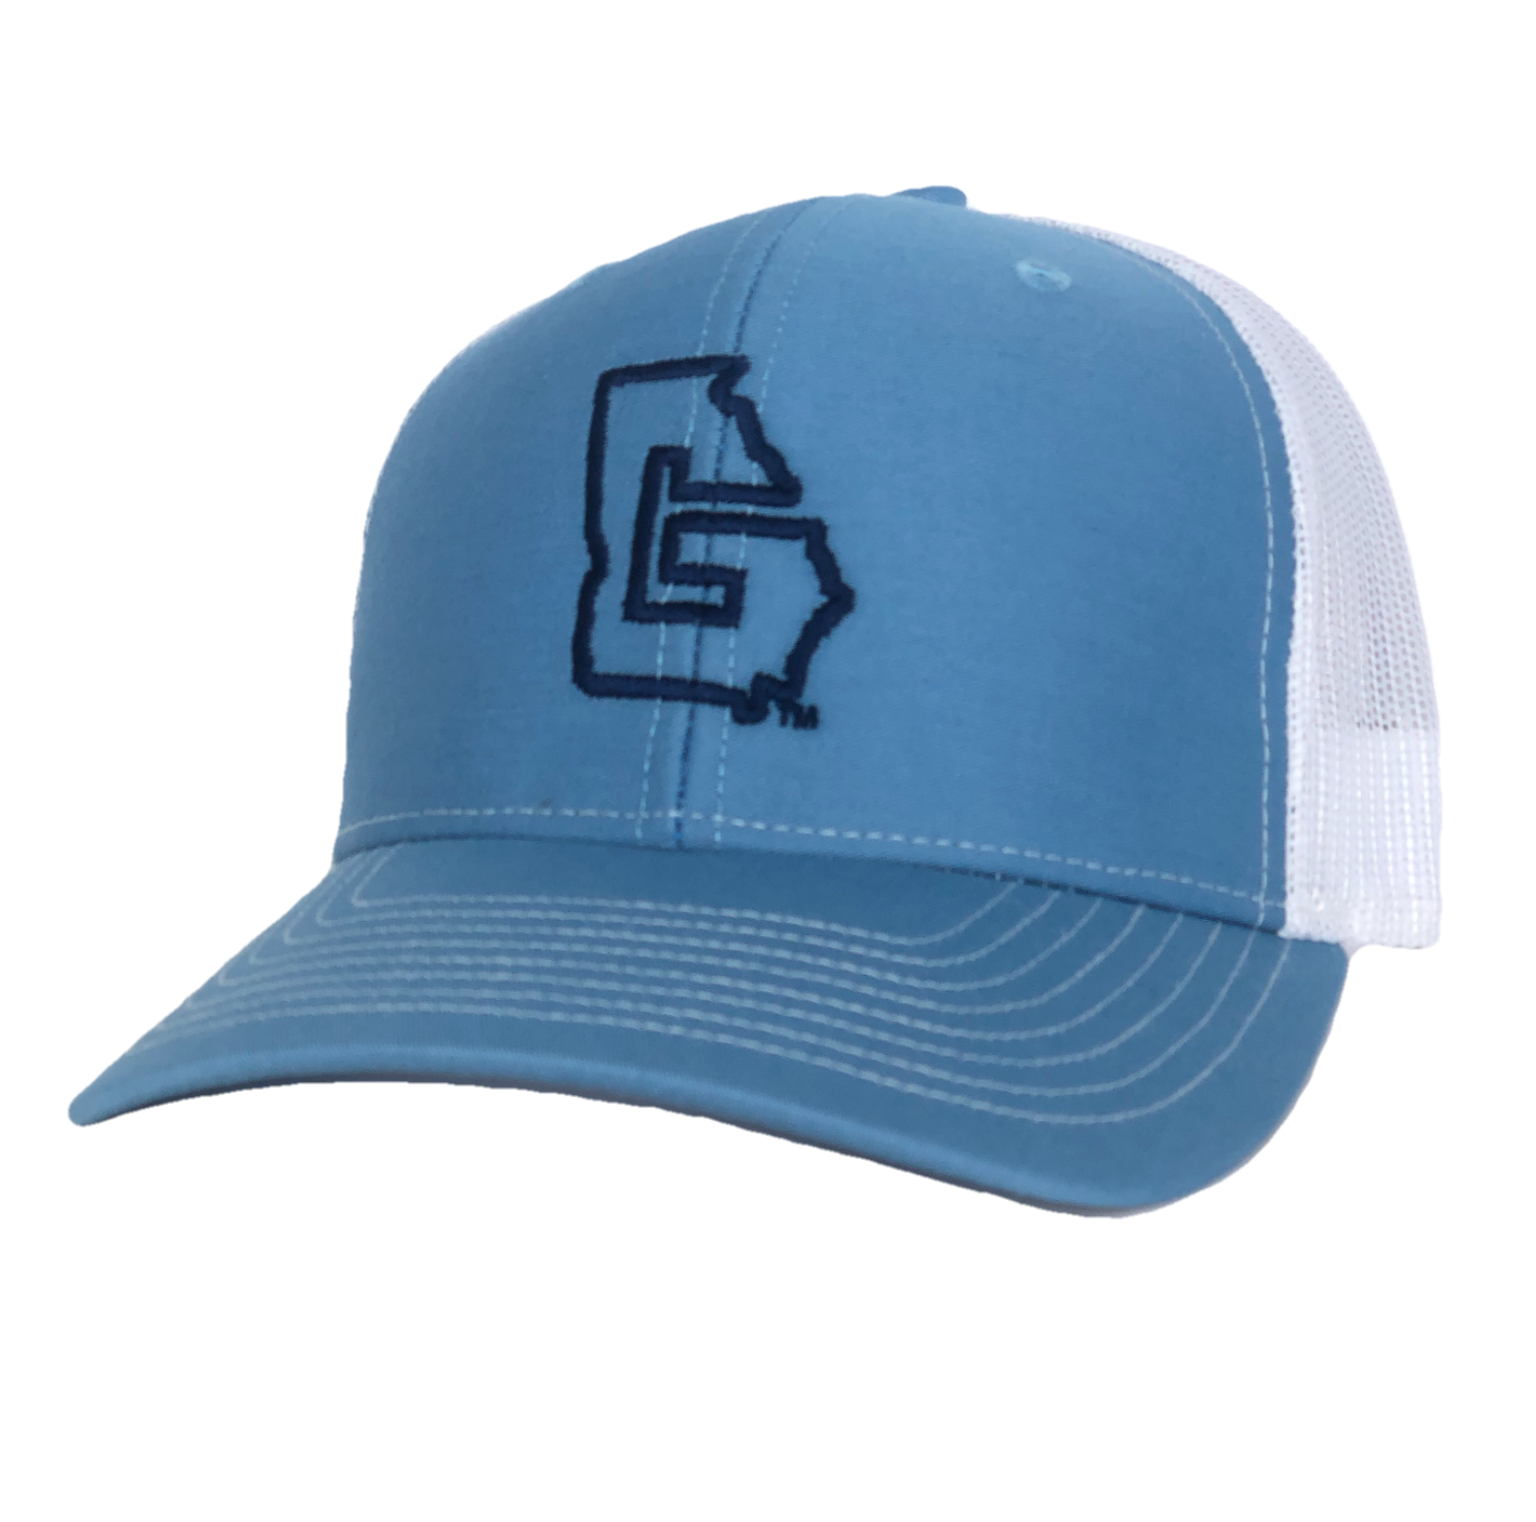 Columbia Blue/White Trucker Hat